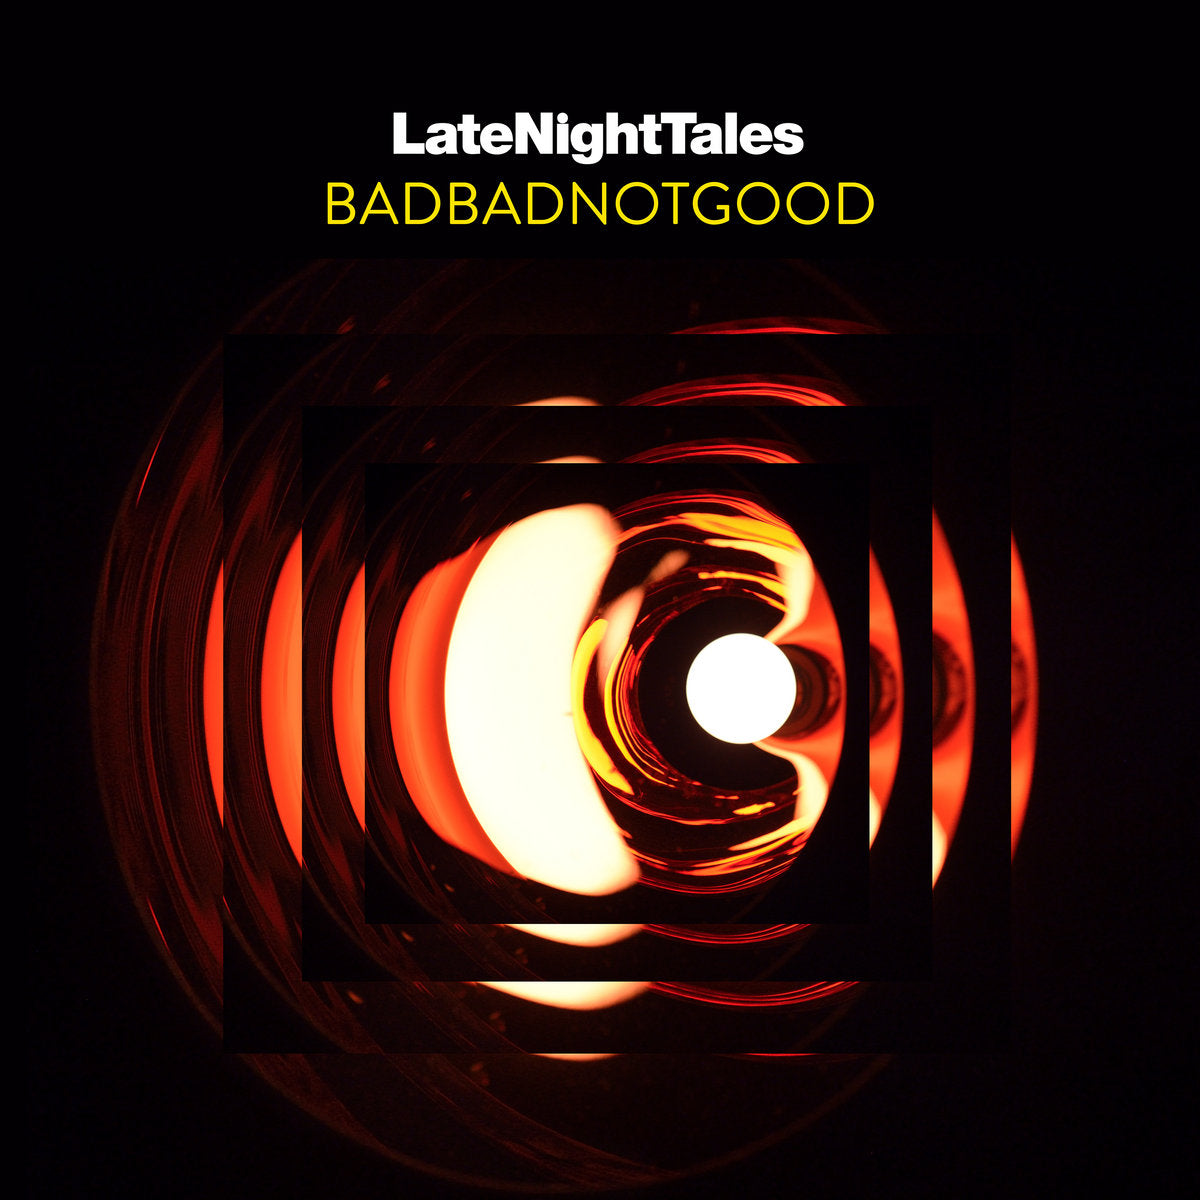 VARIOUS - BadBadNotGood: Late Night Tales (Unmixed) - 2LP - 180g Vinyl